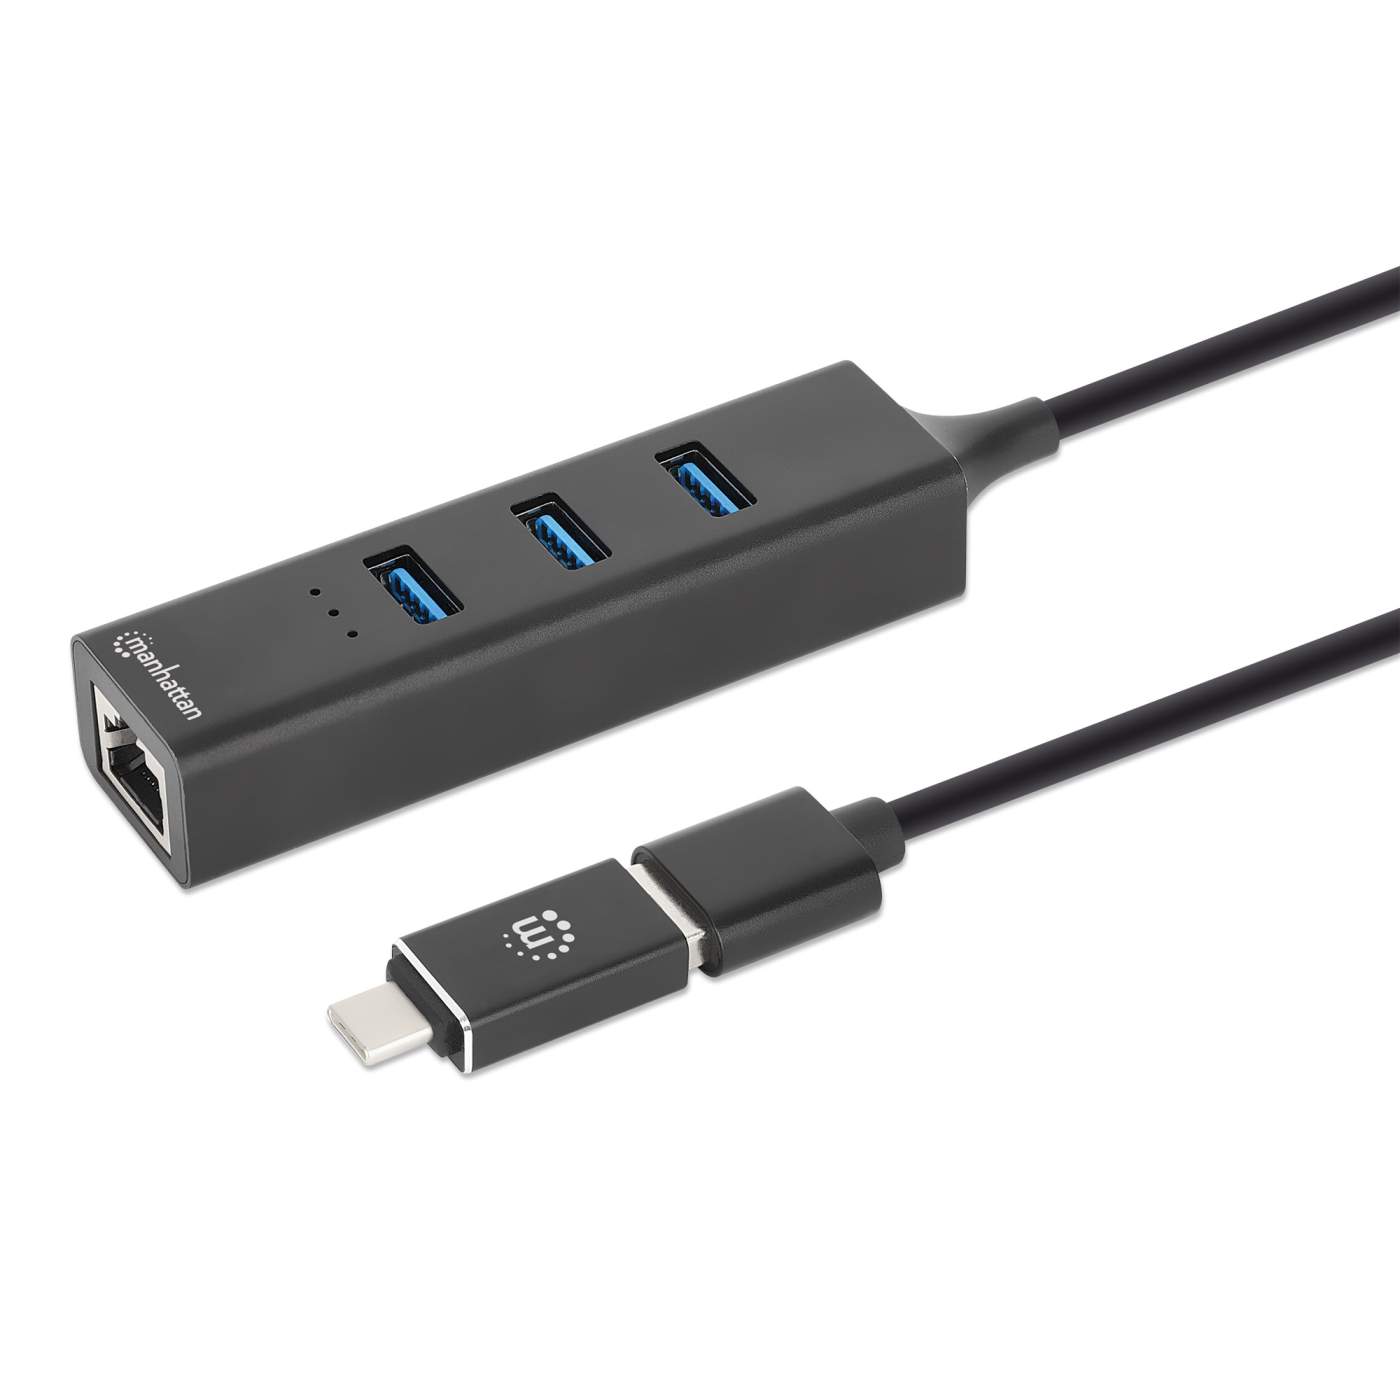 Hub USB-C, multiport, 5 ports, 2 USB-A, USB-C, HDMI™, LAN/Ether